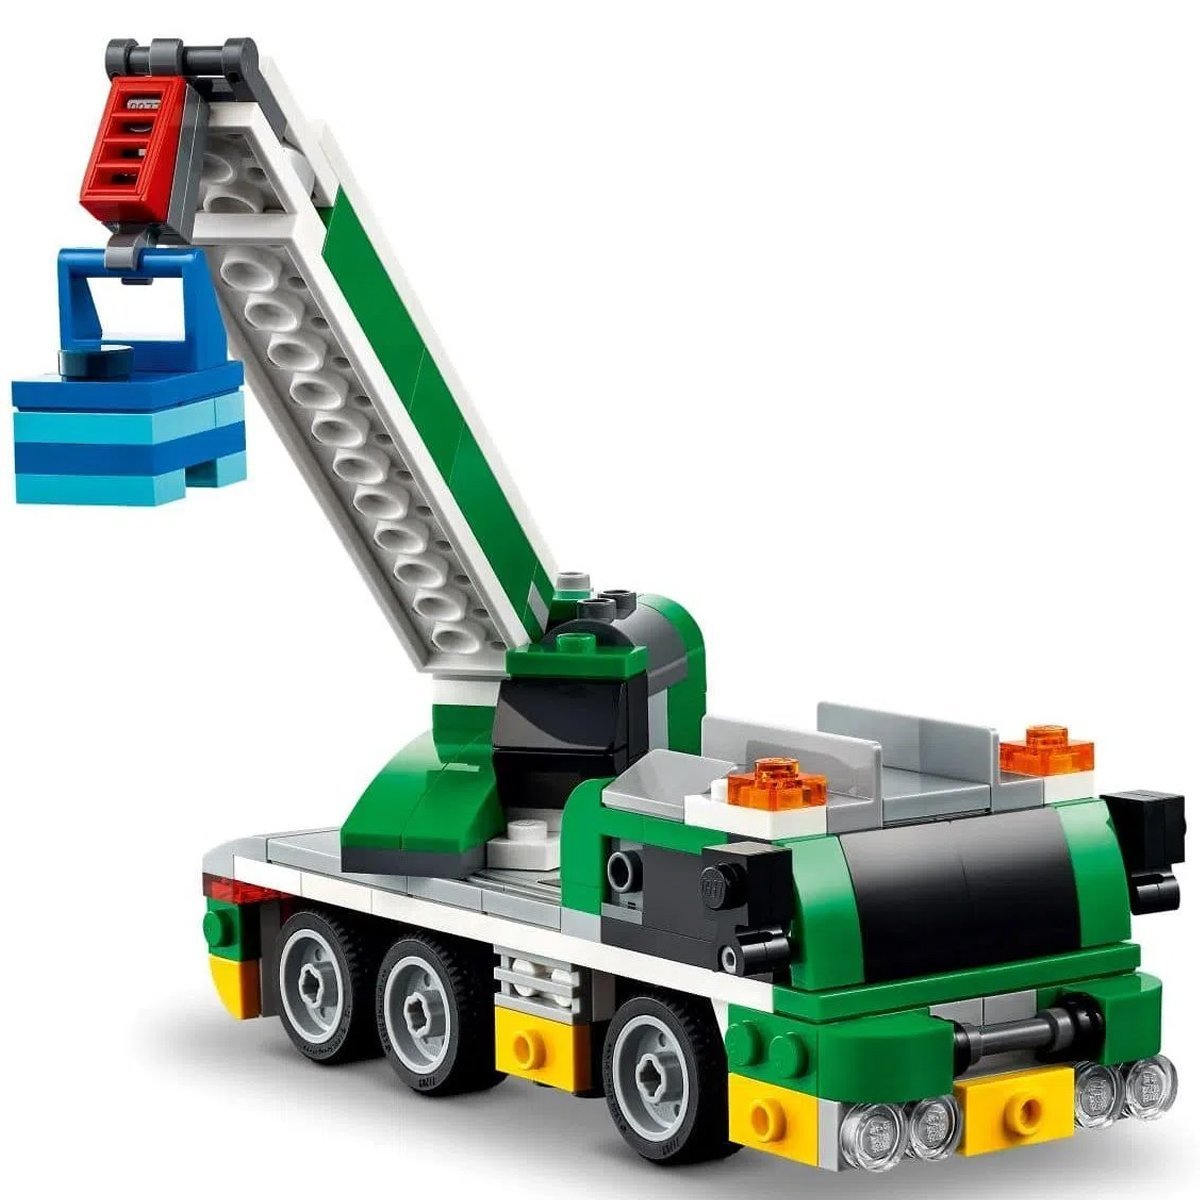 Lego Creator Carro de Corrida de Rua